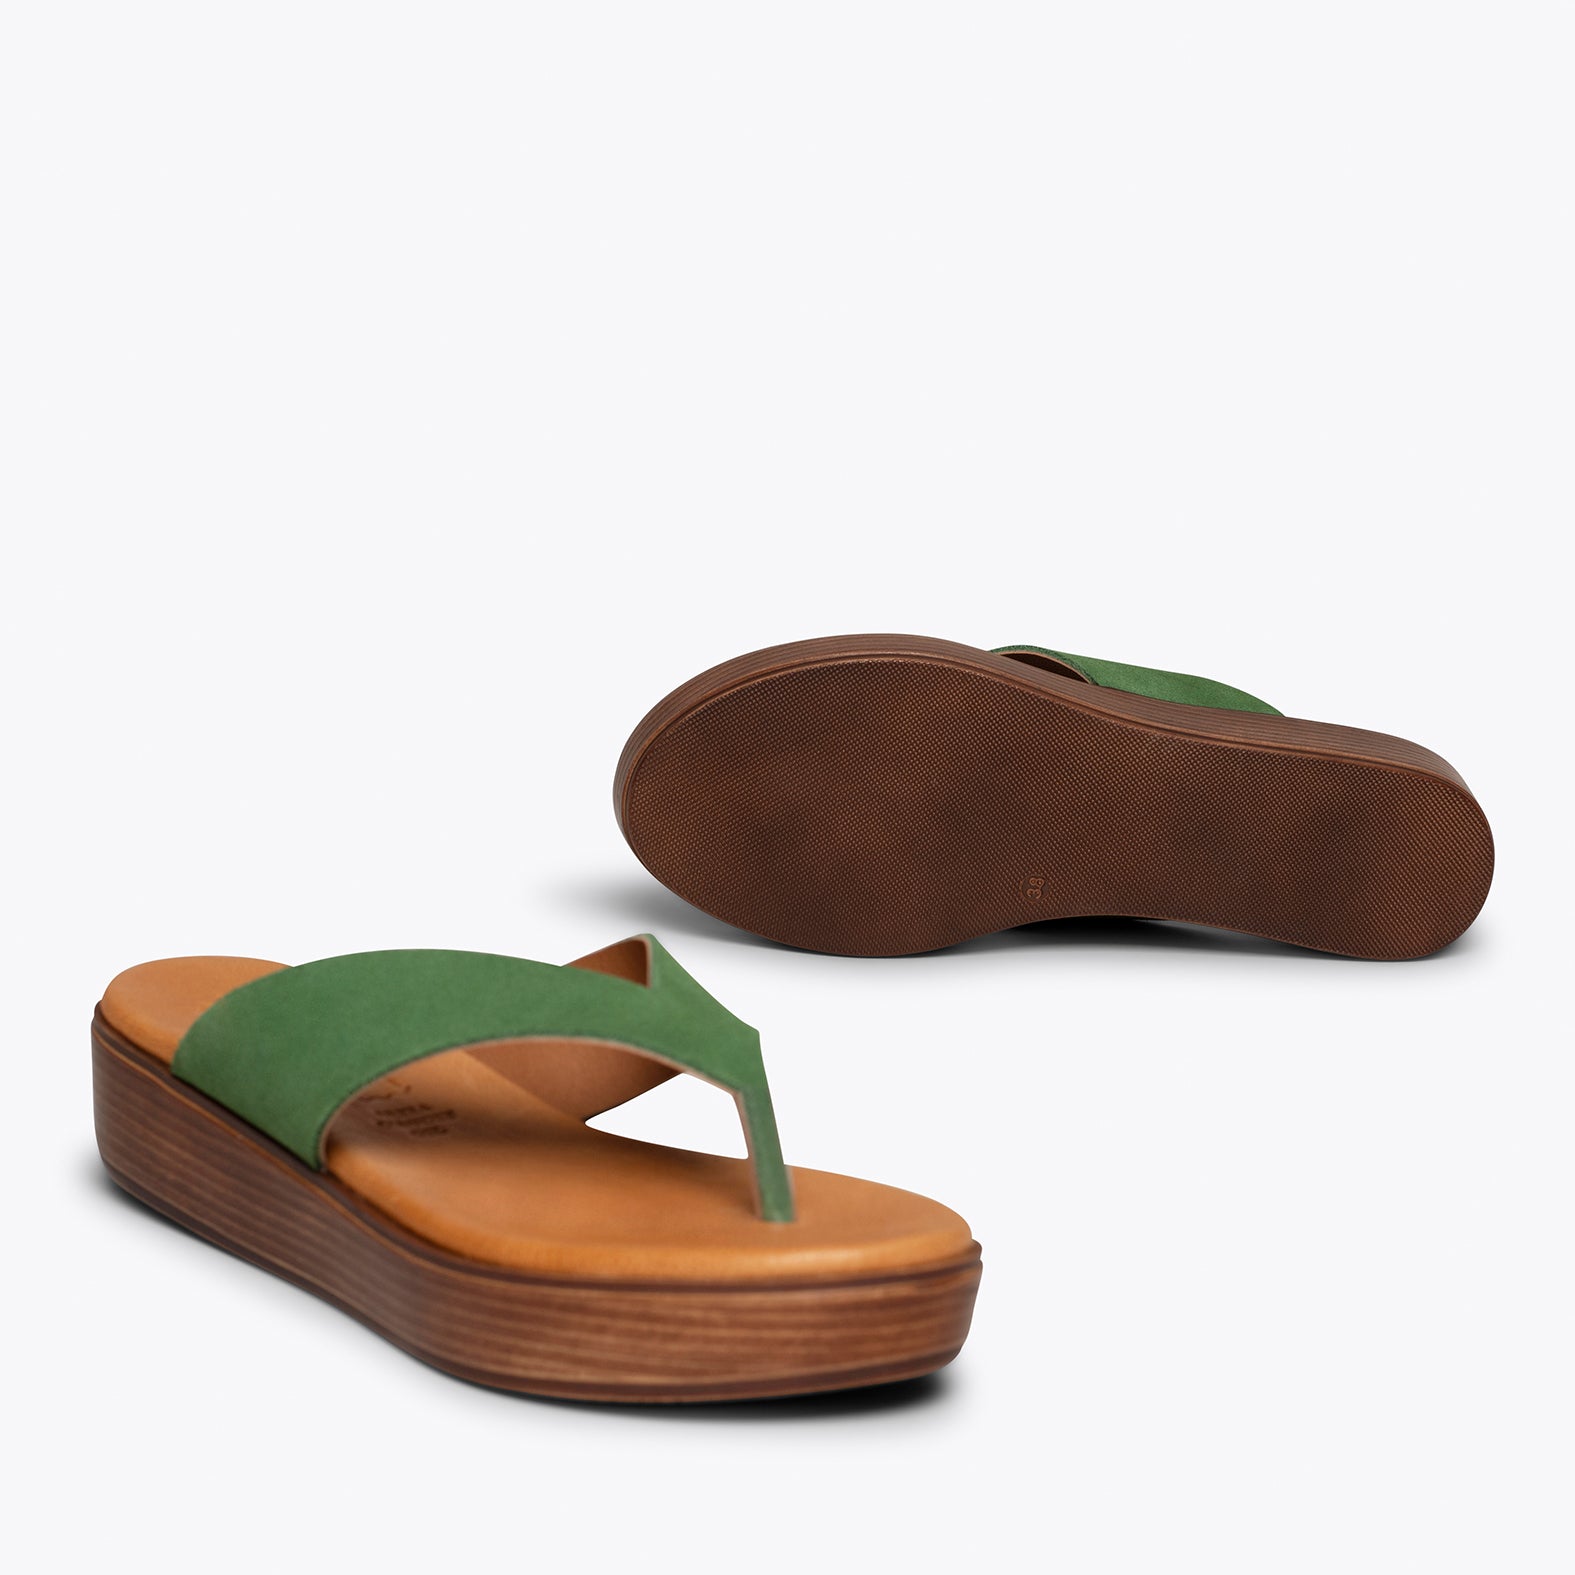 BASIC – GREEN leather flip flops